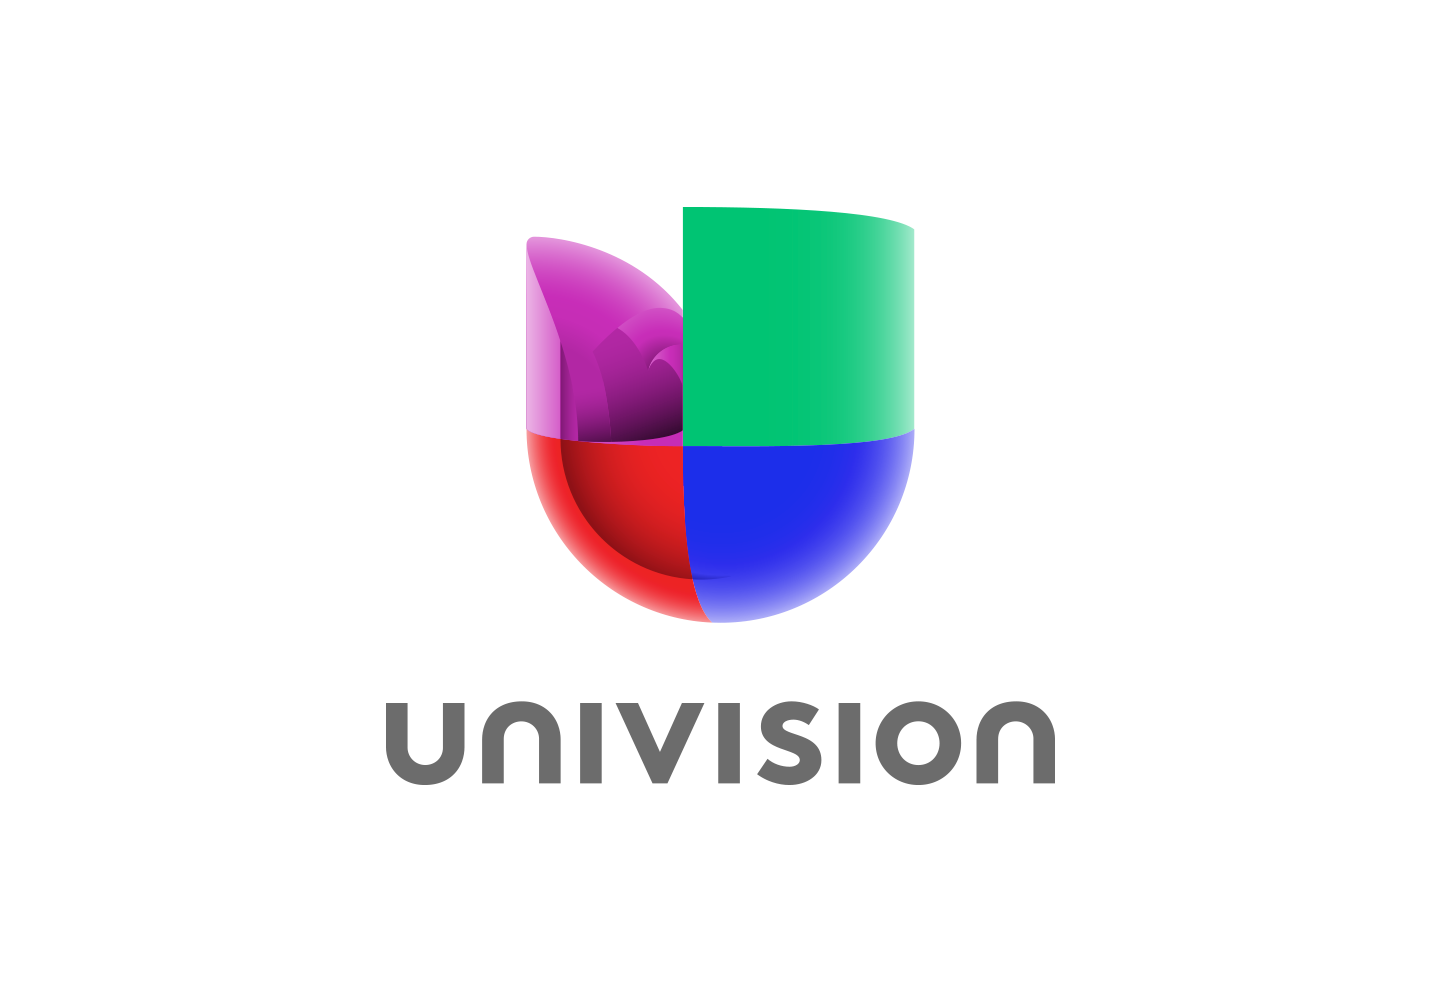 univision-logo-png-15.png